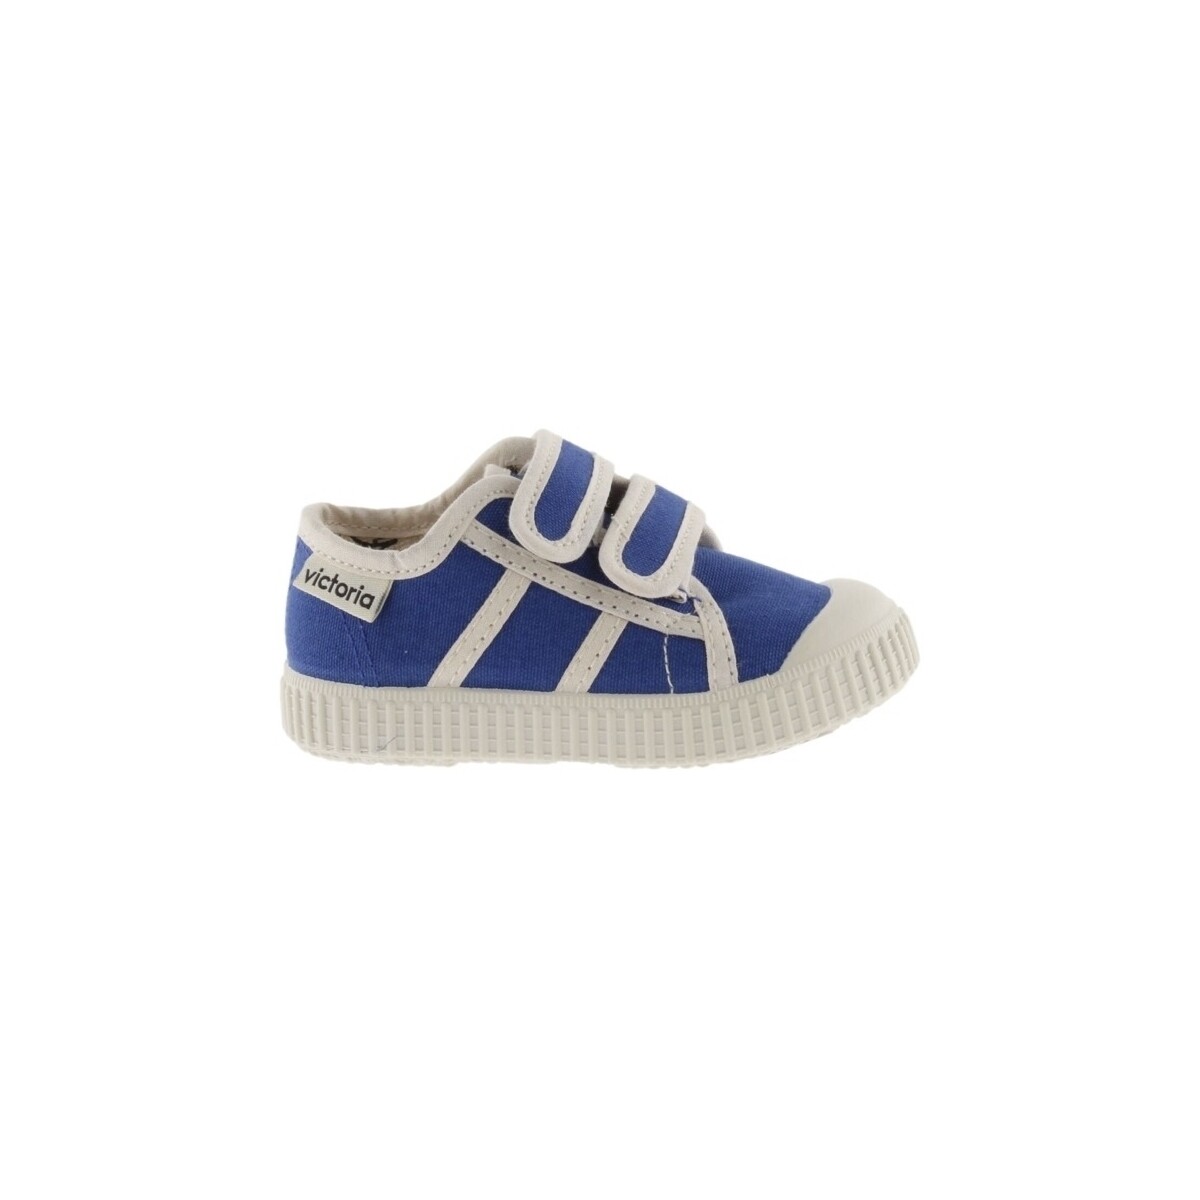 Chaussures Enfant Baskets mode Victoria Baby 366156 - Azul Bleu